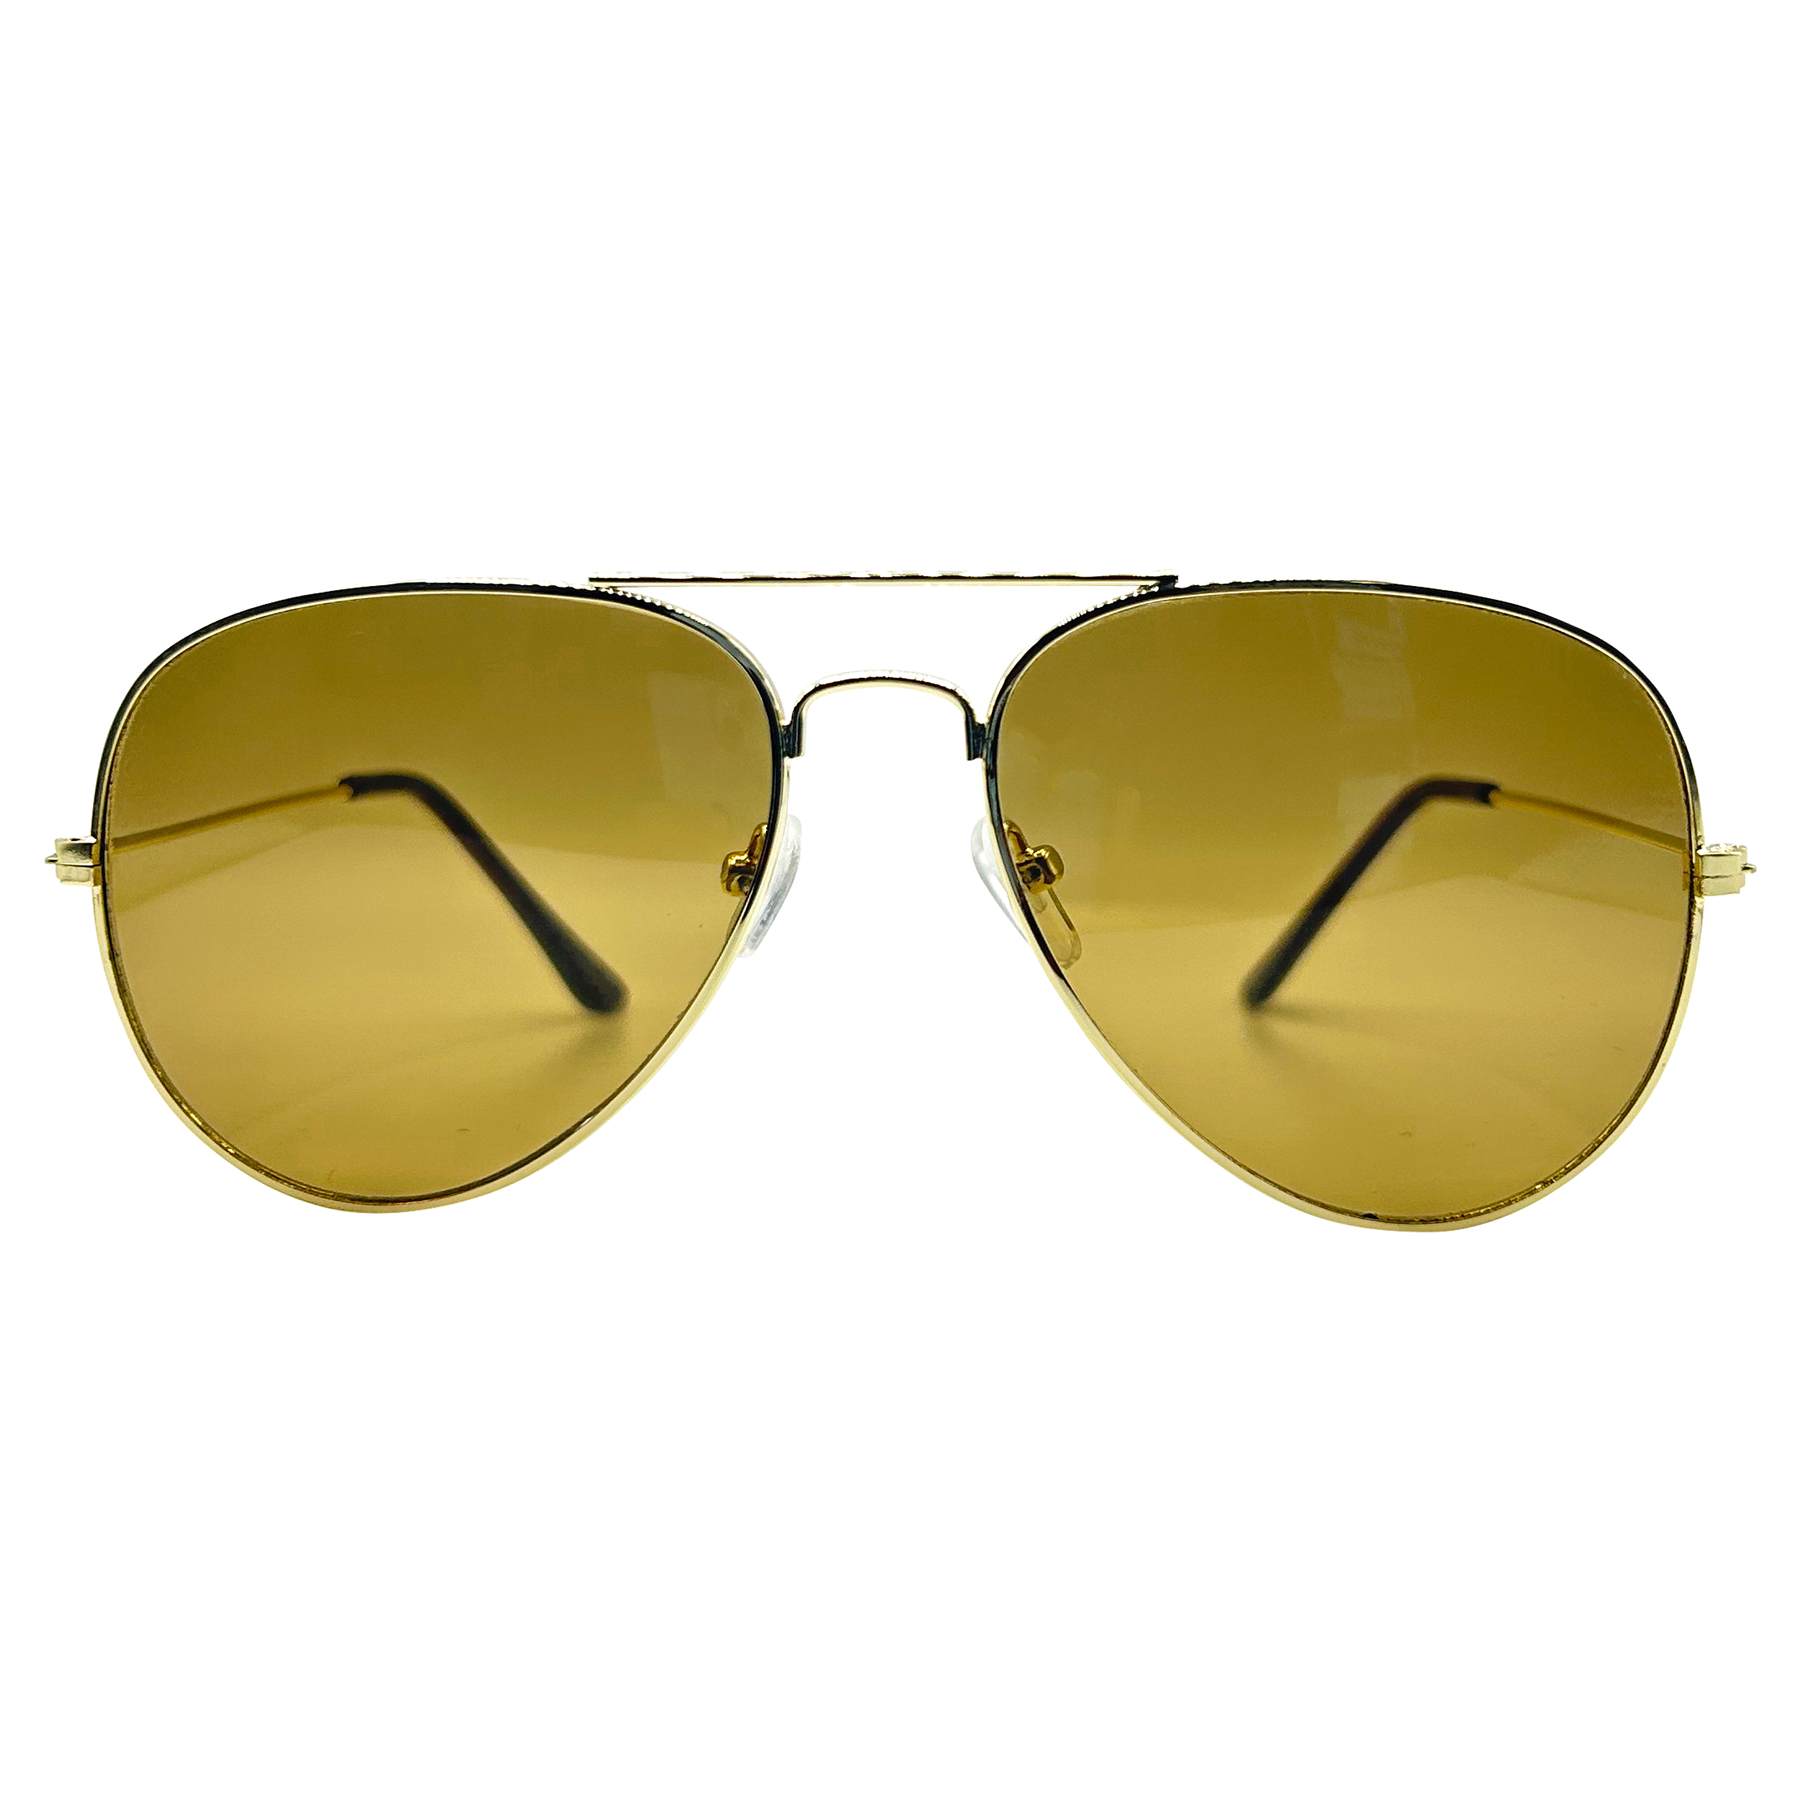 SWARM Classic Retro Teardrop Aviator Sunglasses